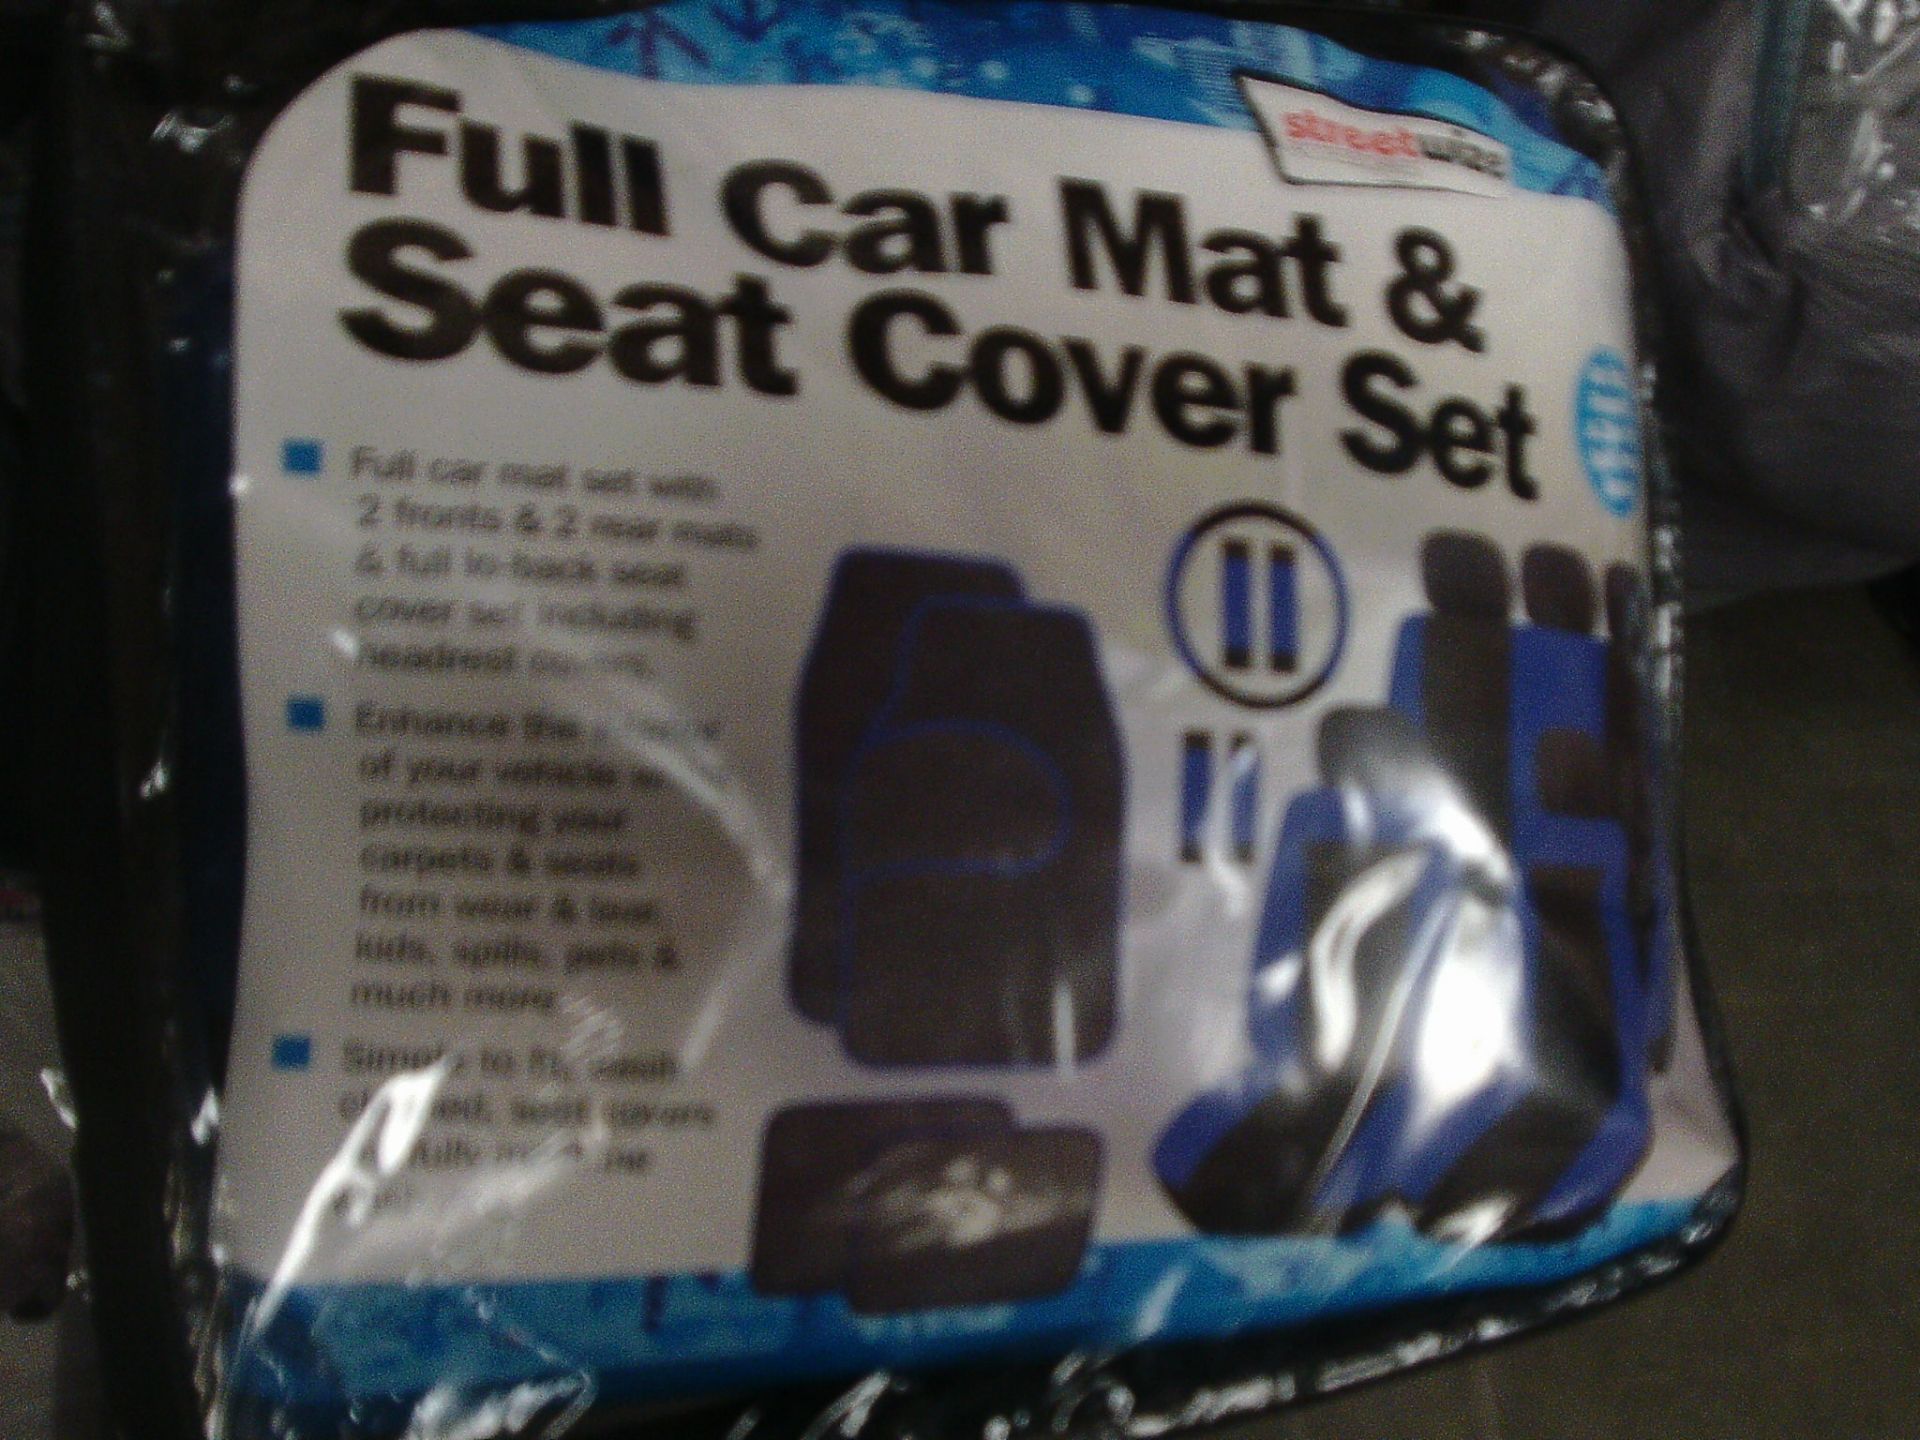 2 pcs full car mat and seat cover